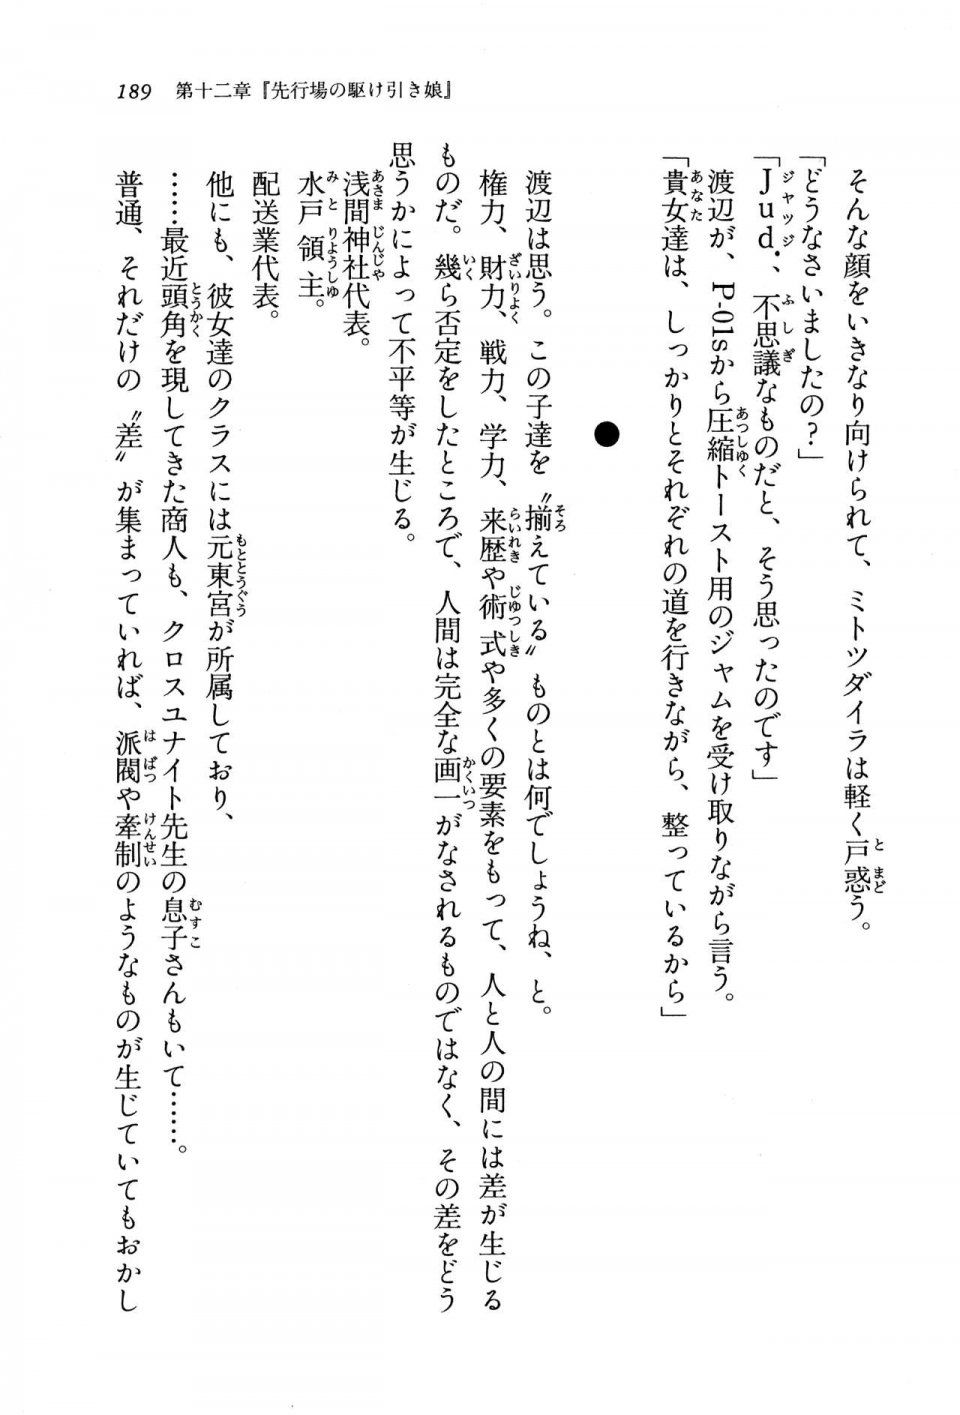 Kyoukai Senjou no Horizon BD Special Mininovel Vol 8(4B) - Photo #193